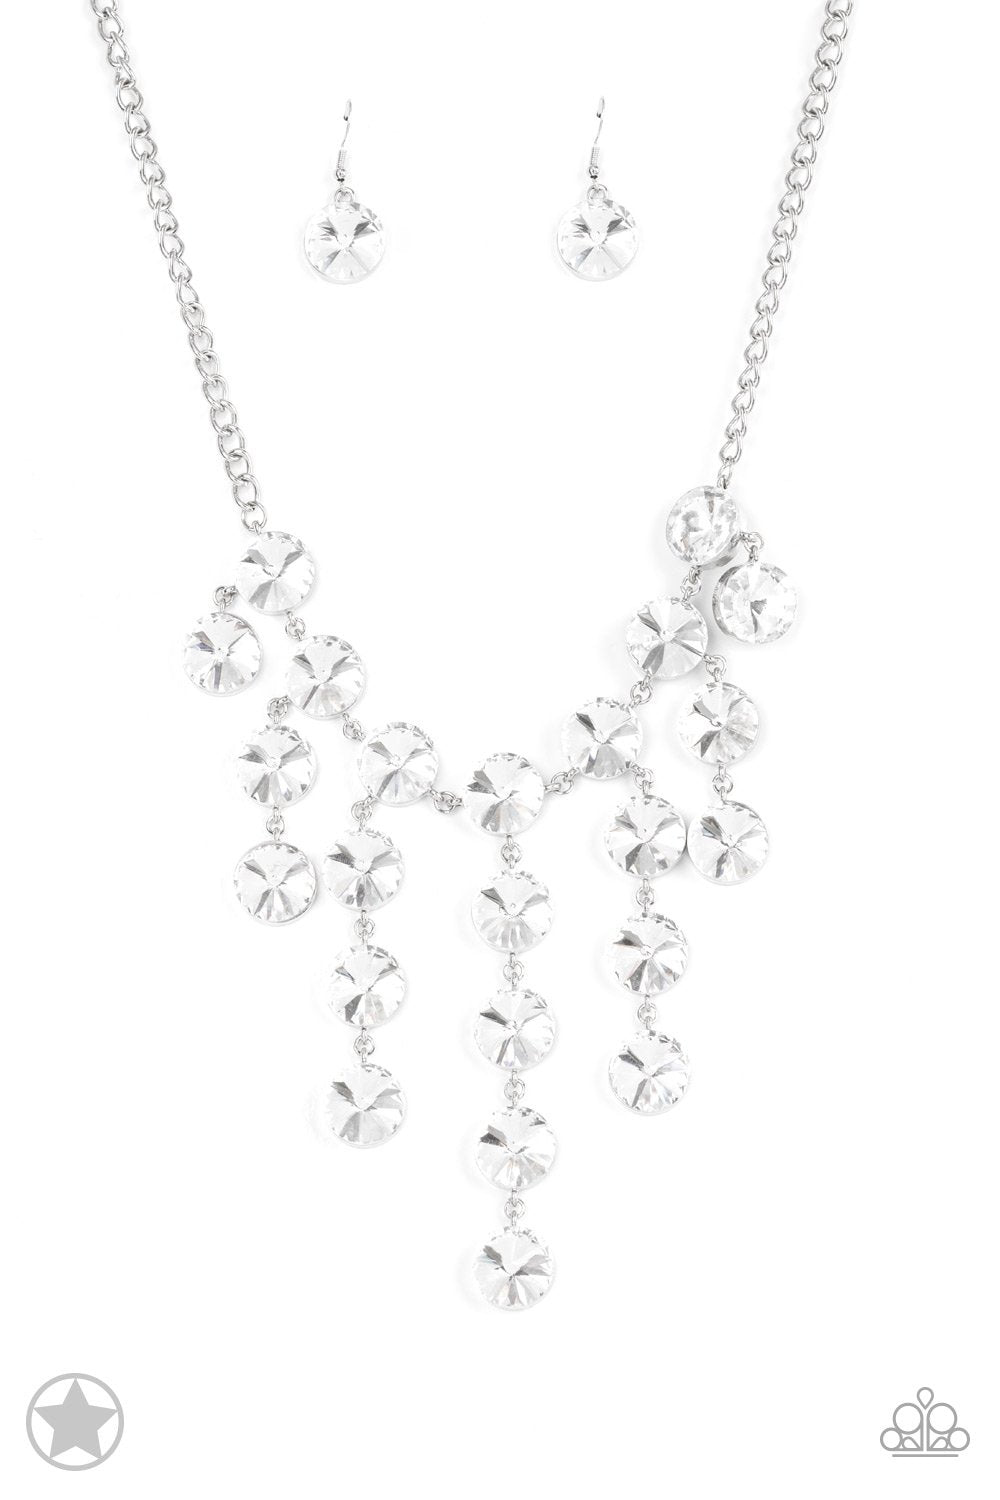 Spotlight Stunner White Rhinestone Necklace - Paparazzi Accessories - lightbox -CarasShop.com - $5 Jewelry by Cara Jewels